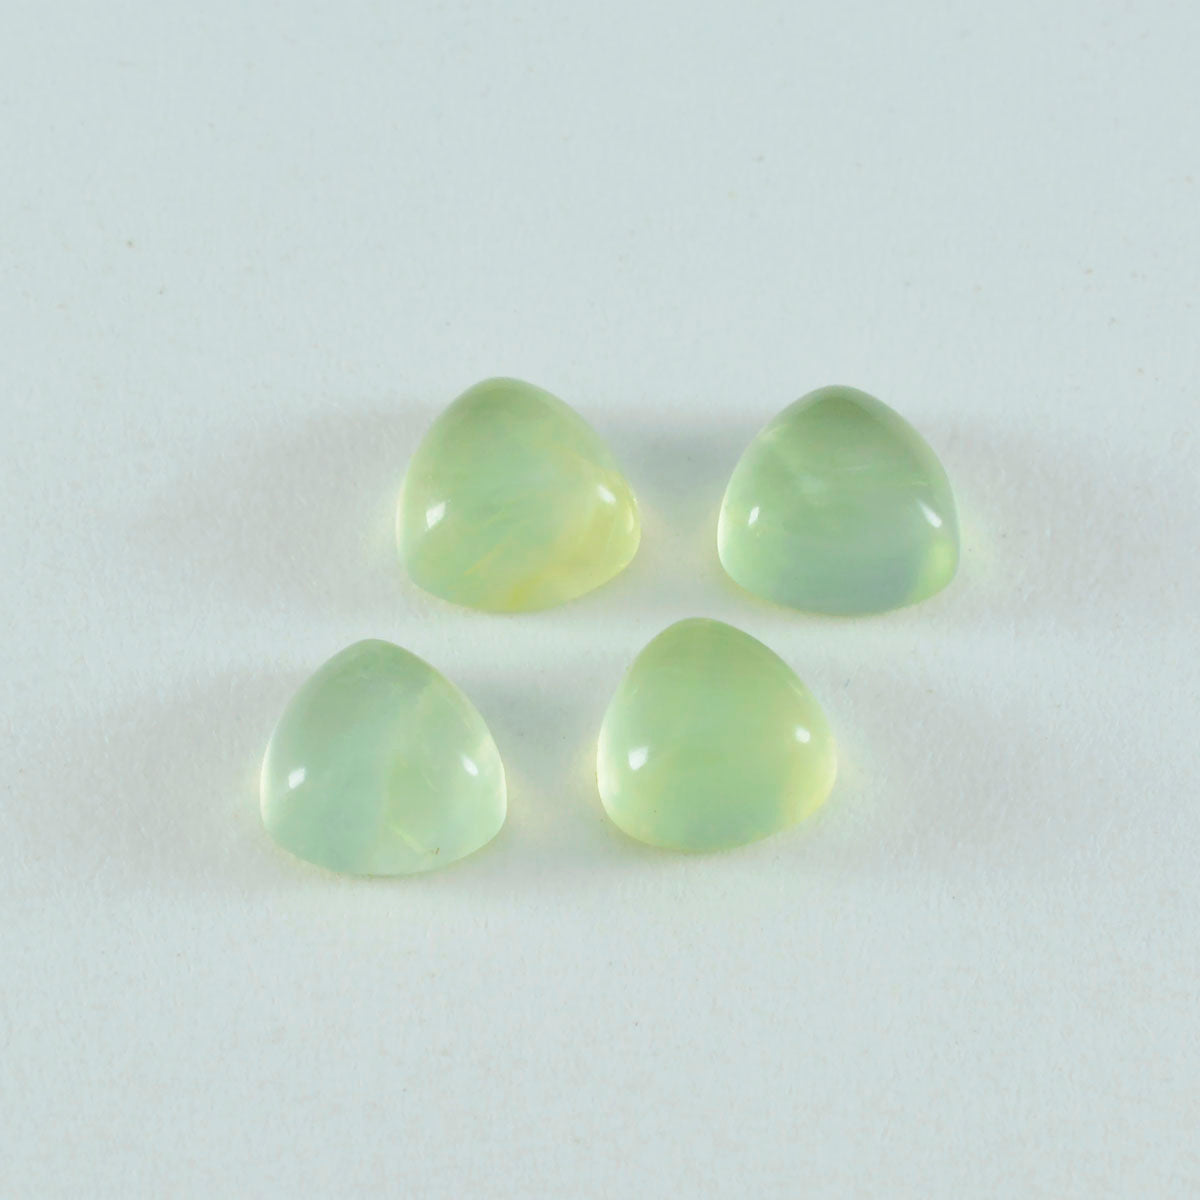 riyogems 1pc グリーン プレナイト カボション 14x14 mm 兆形状の甘い品質のルース宝石